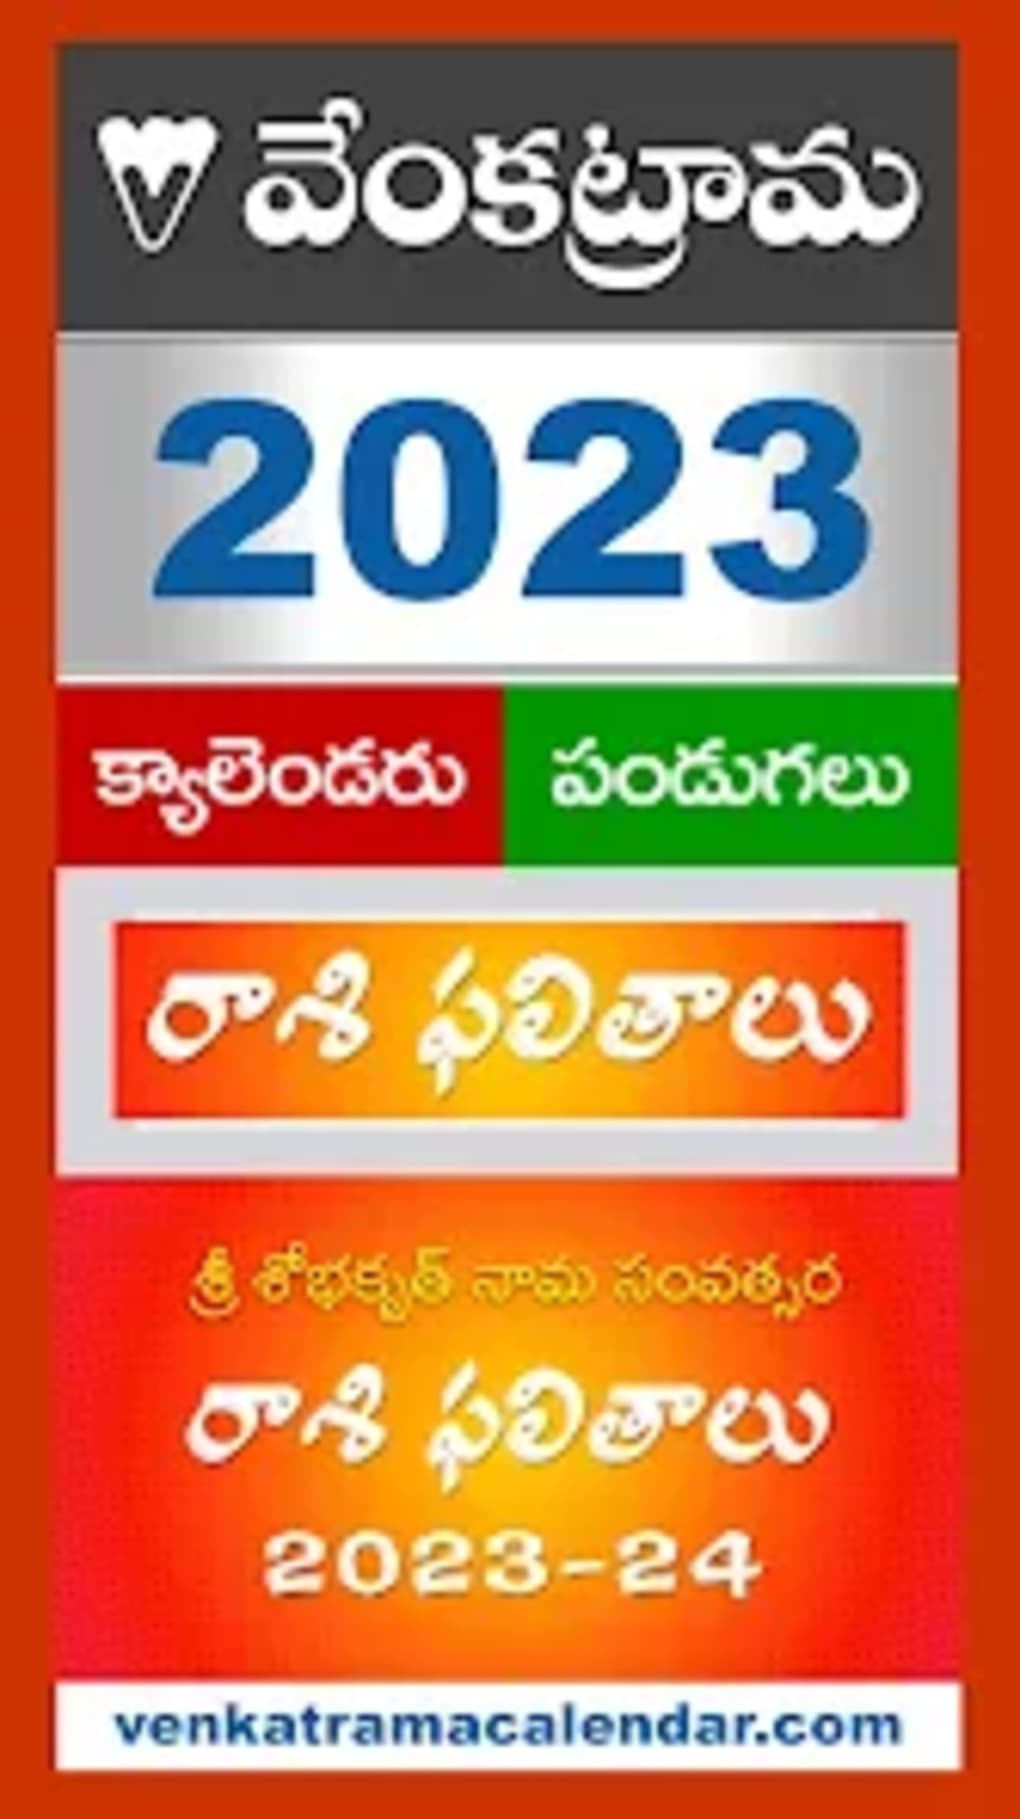 Venkatrama Calendar 2023 for Android Download